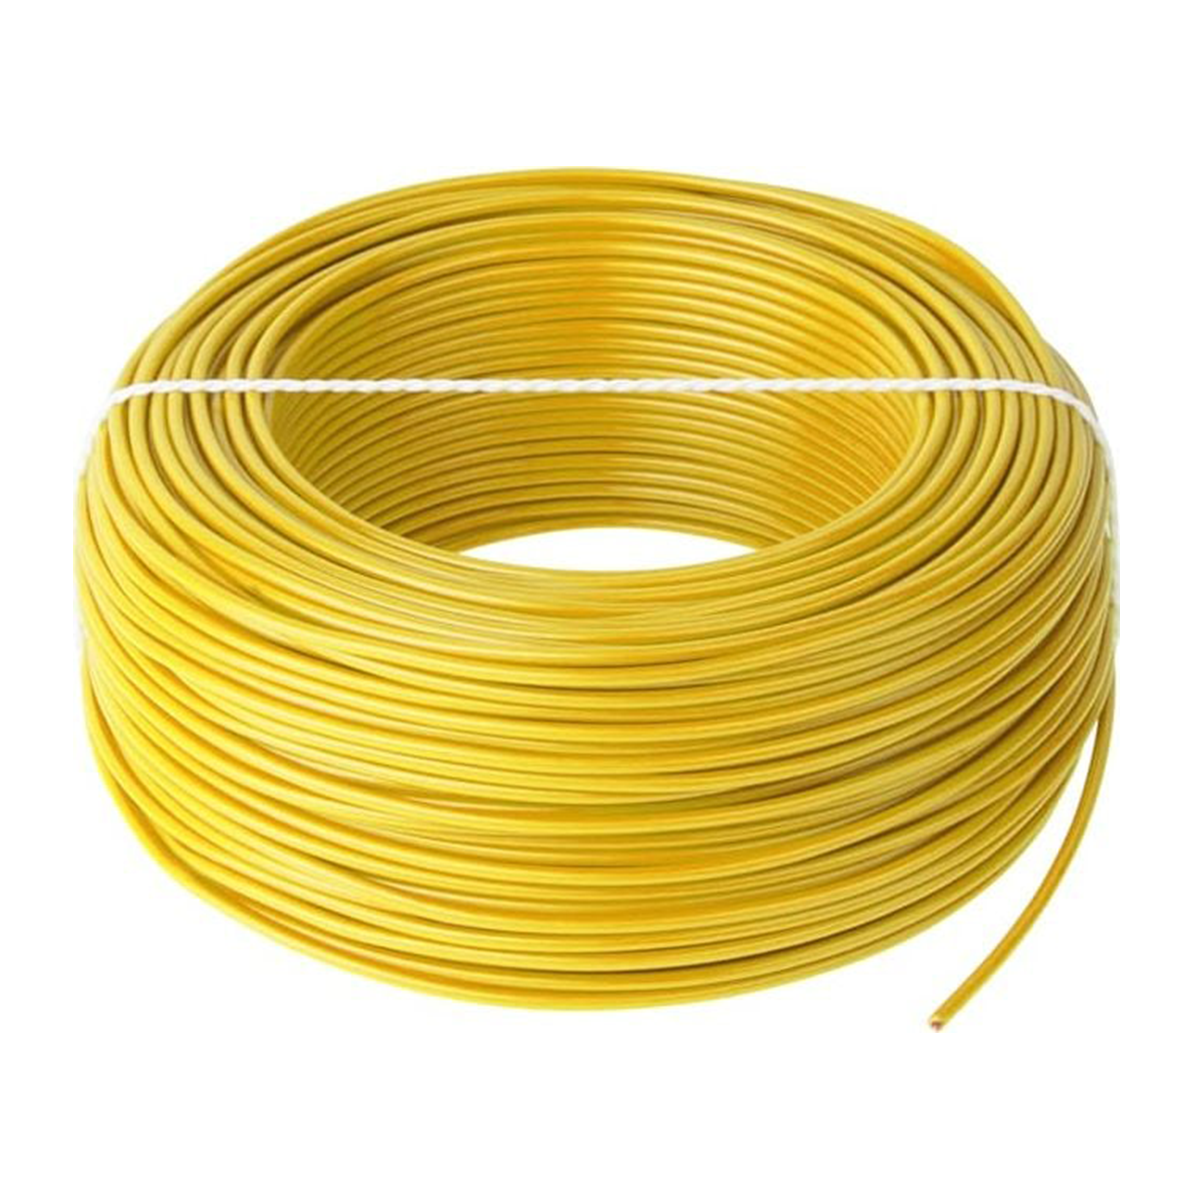 Cablu electric FY 1.5 galben, colac 100 m